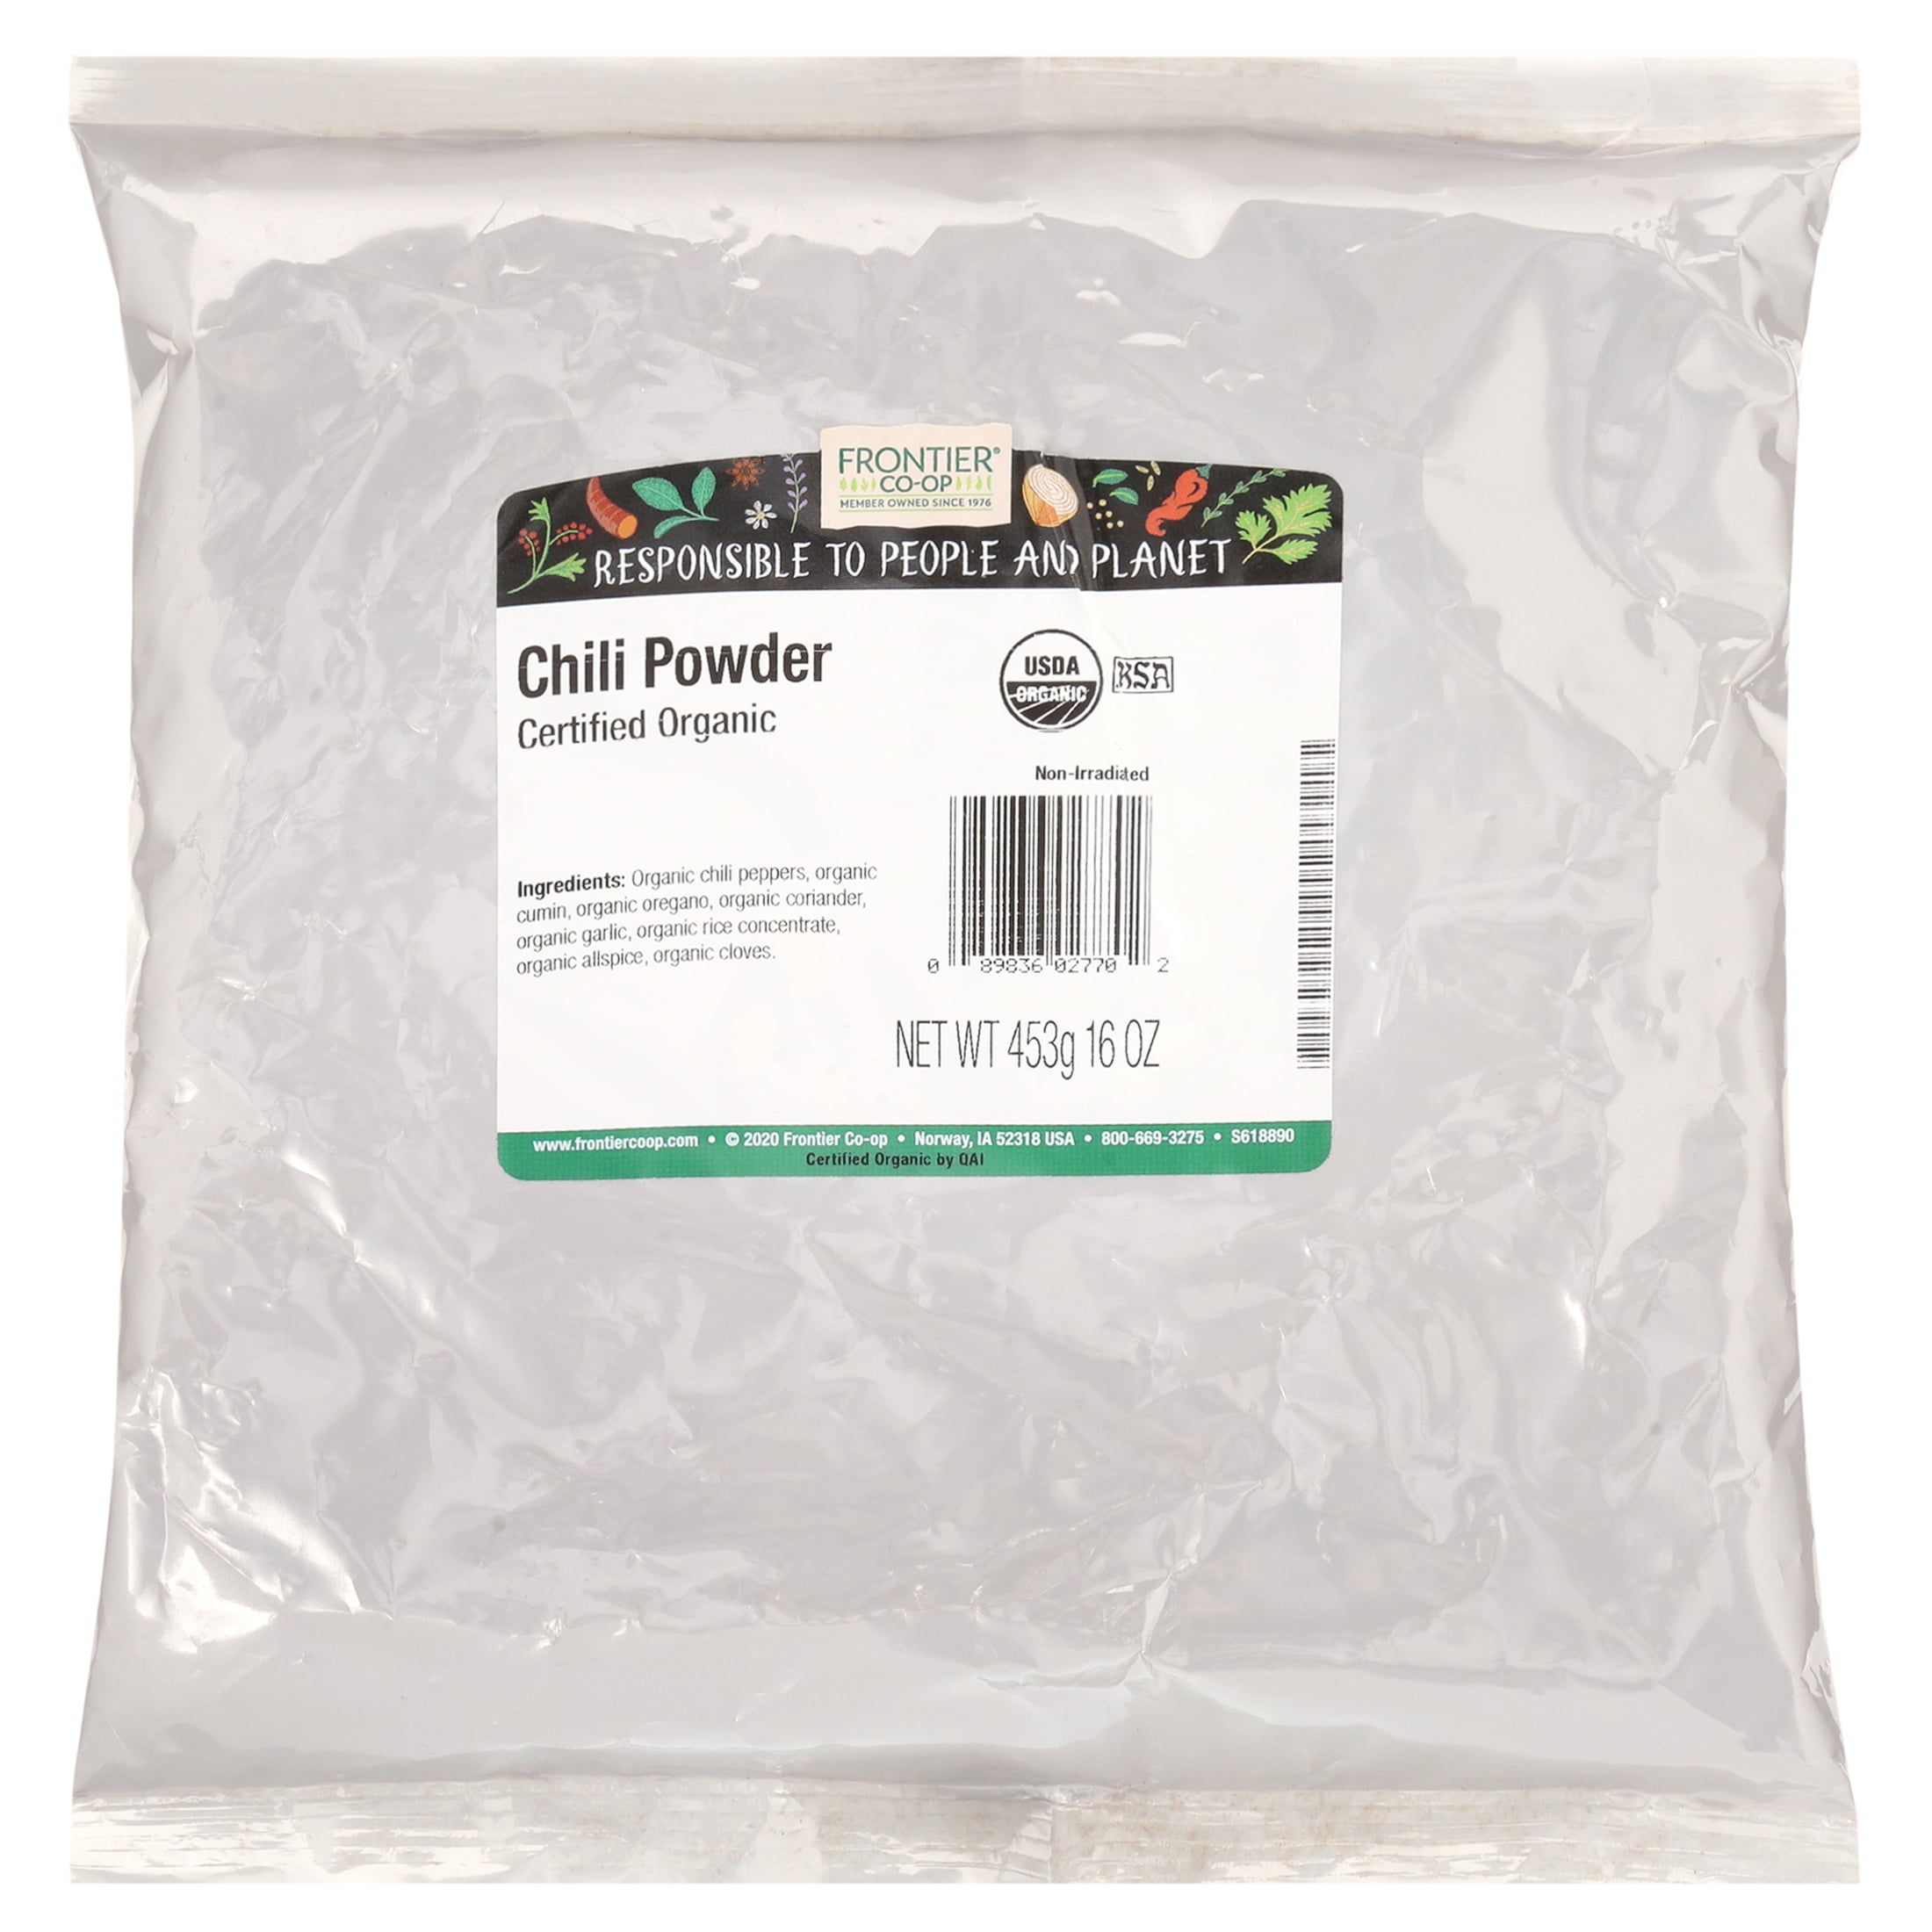 Frontier Chili Powder Blend Certified Organic bulk - Walmart.com